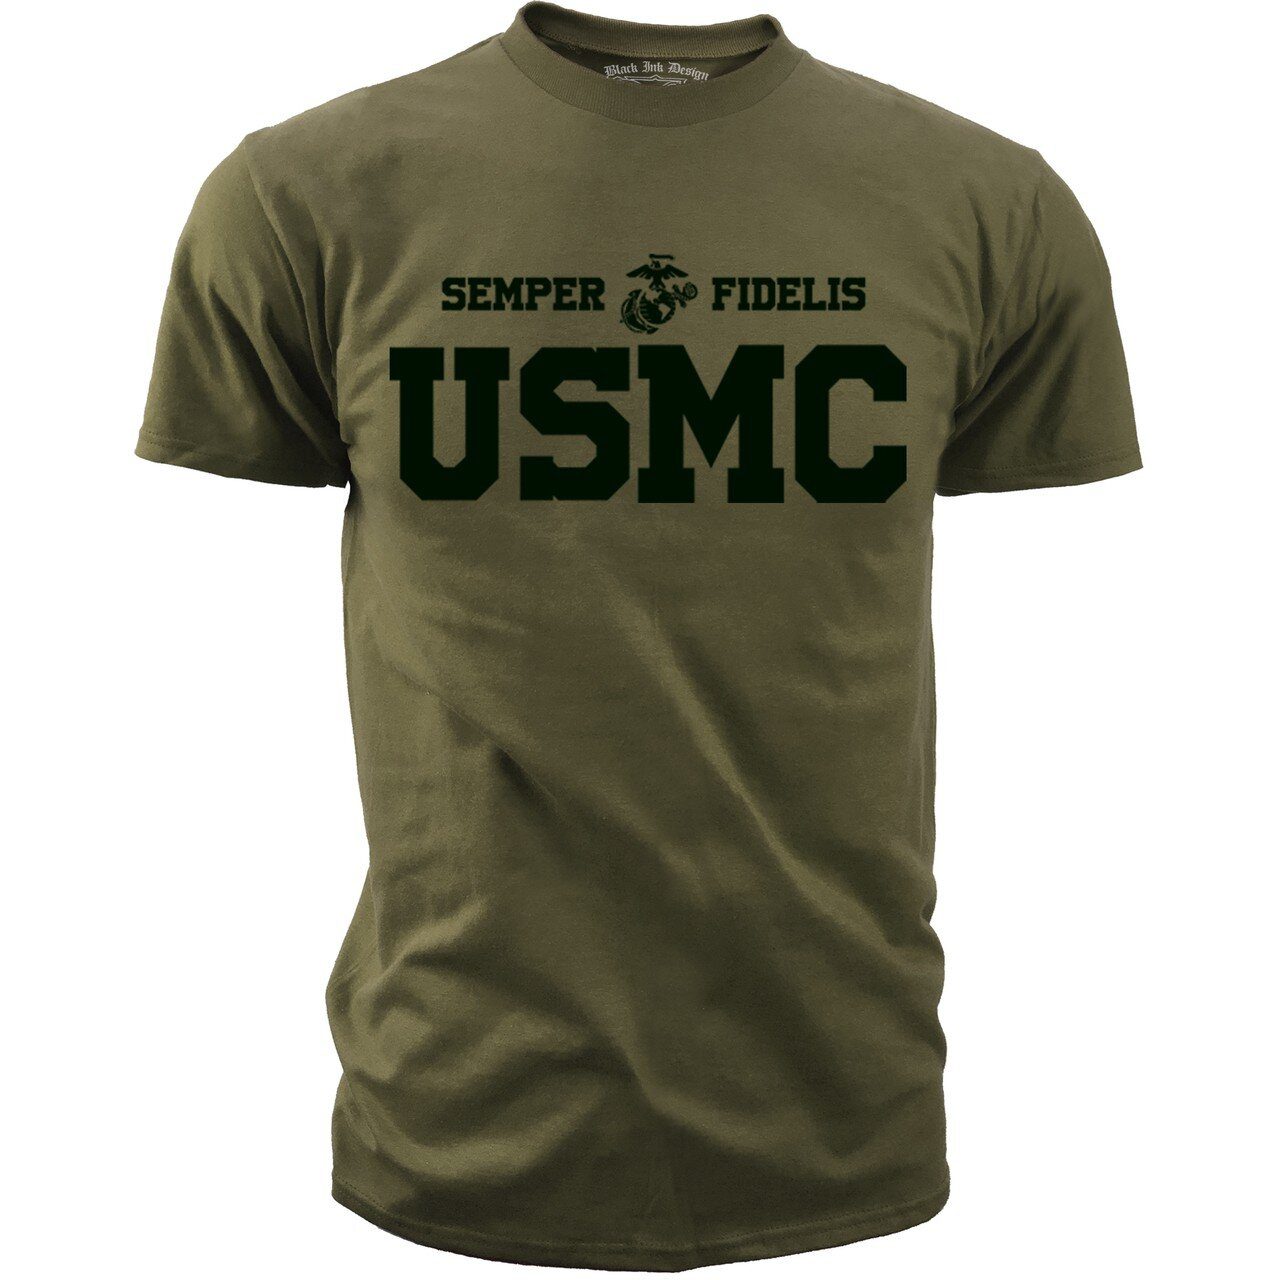 Semper Fidelis USMC Olive Drab T shirt